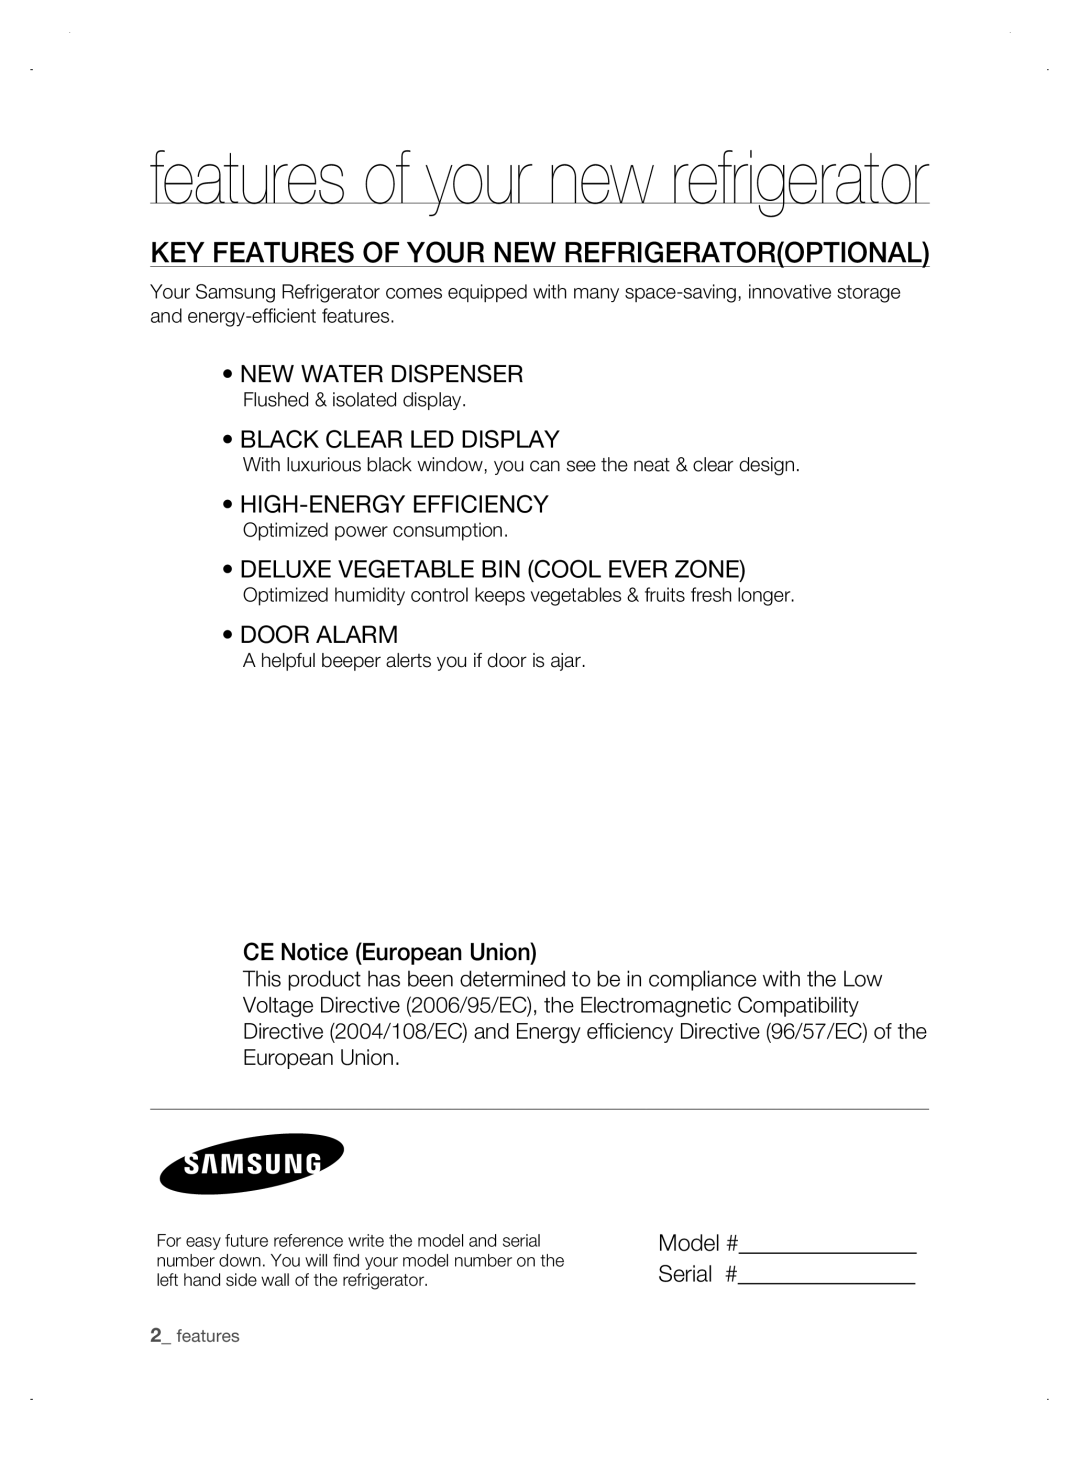 Samsung DA99-01906A features of your new refrigerator, KEy fEaturEs of your nEw rEfrigEratorOPTIONAL, New Water Dispenser 